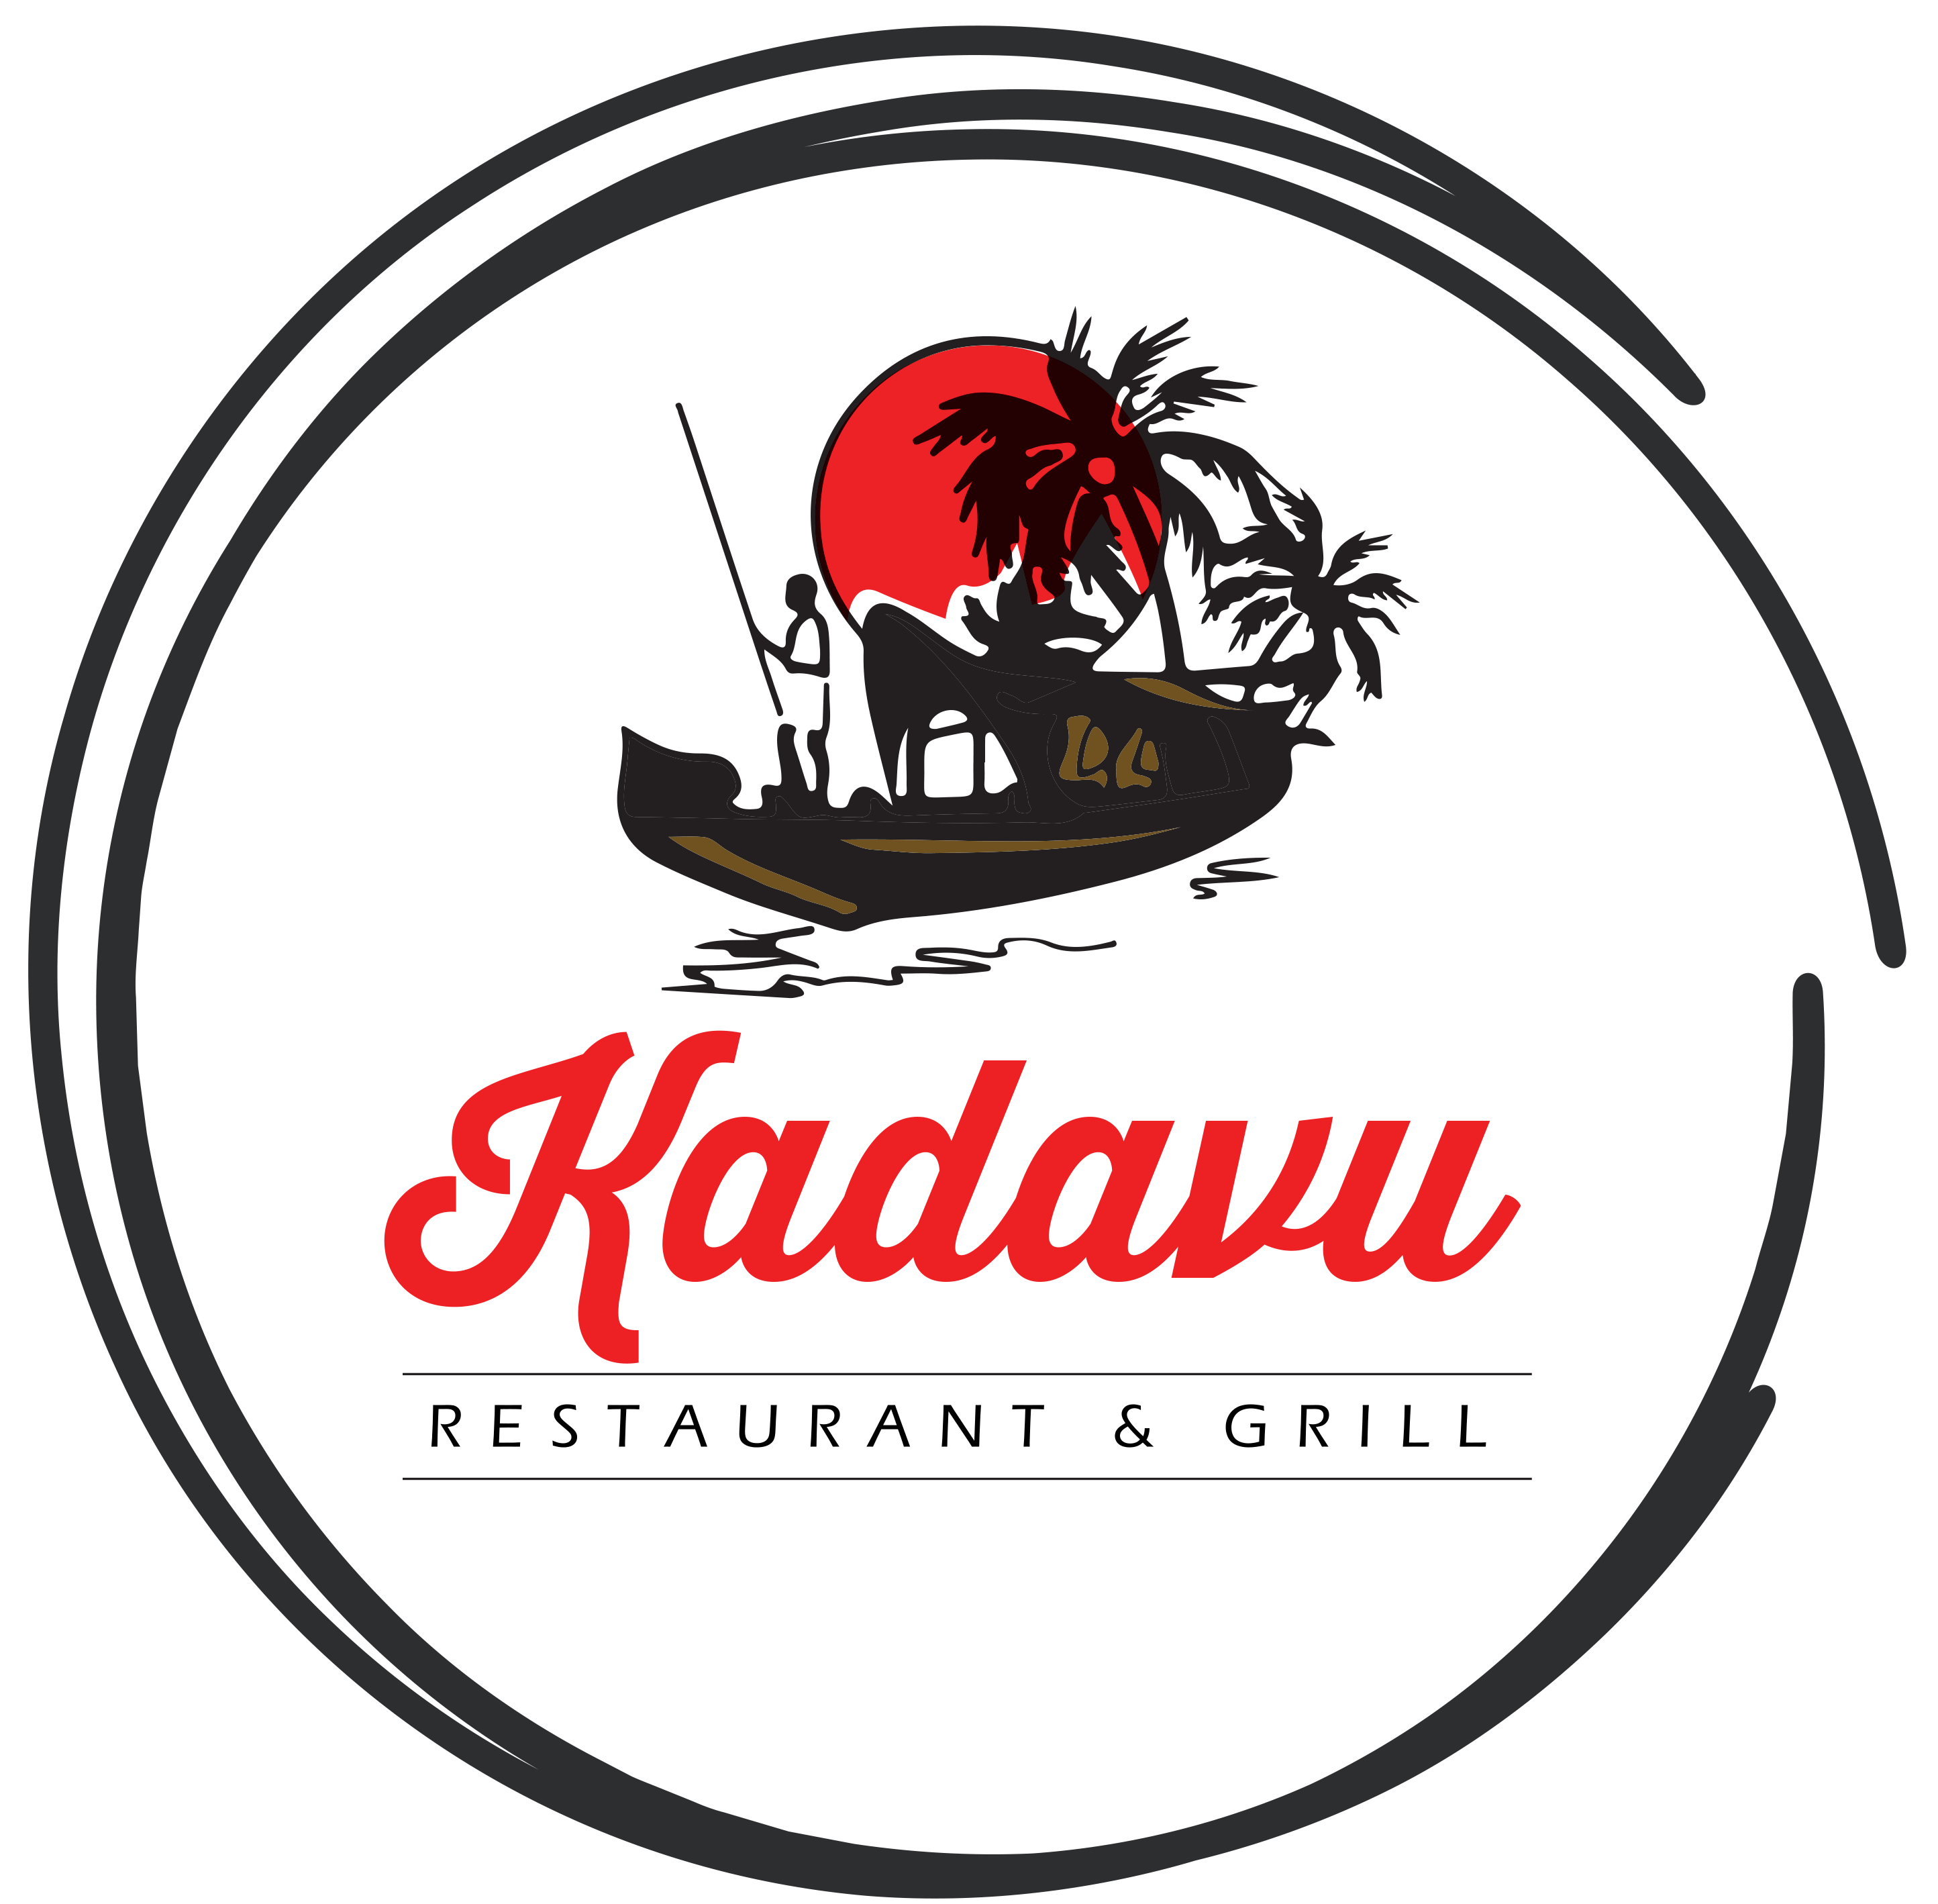 Kadavu Restaurant & Grill